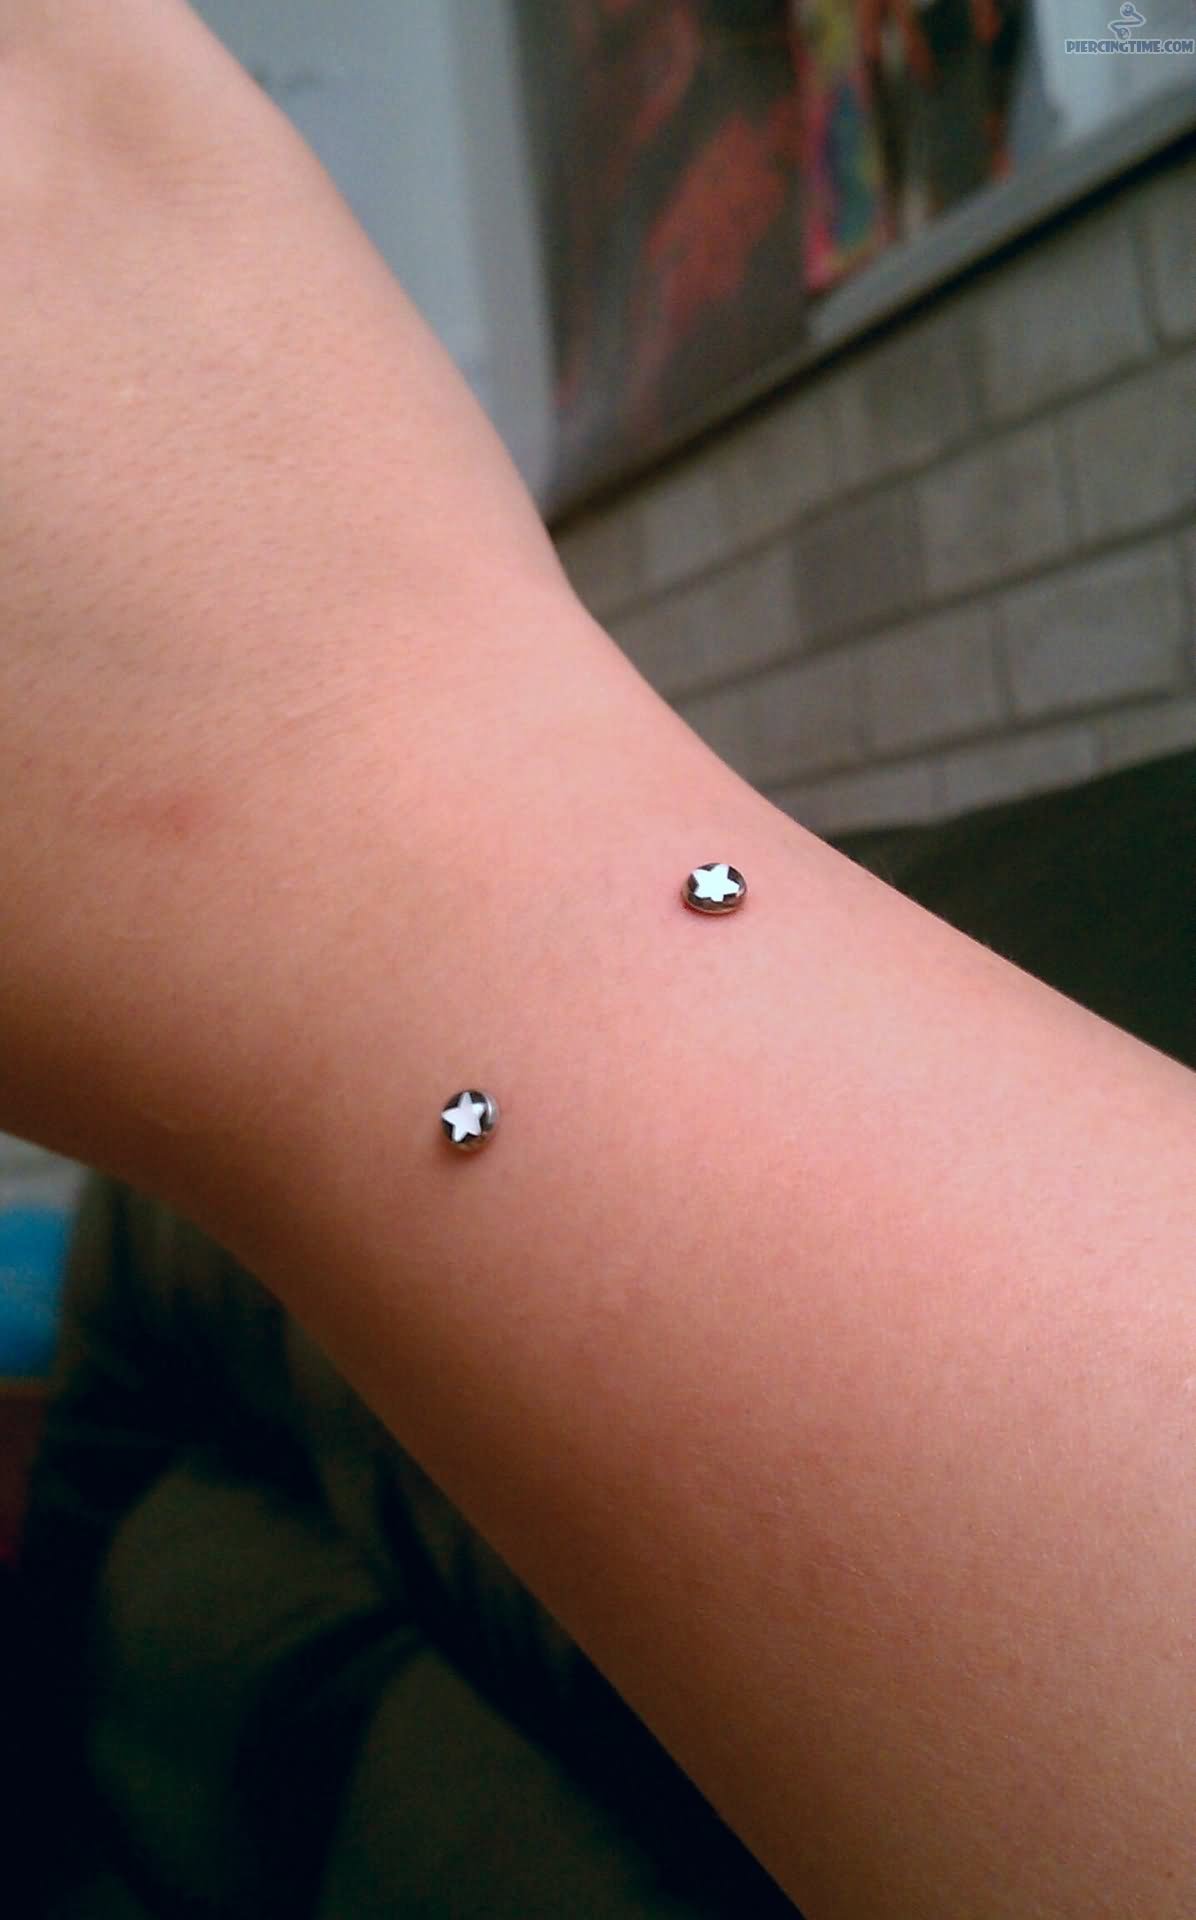 Wrist Piercing With Star Studs